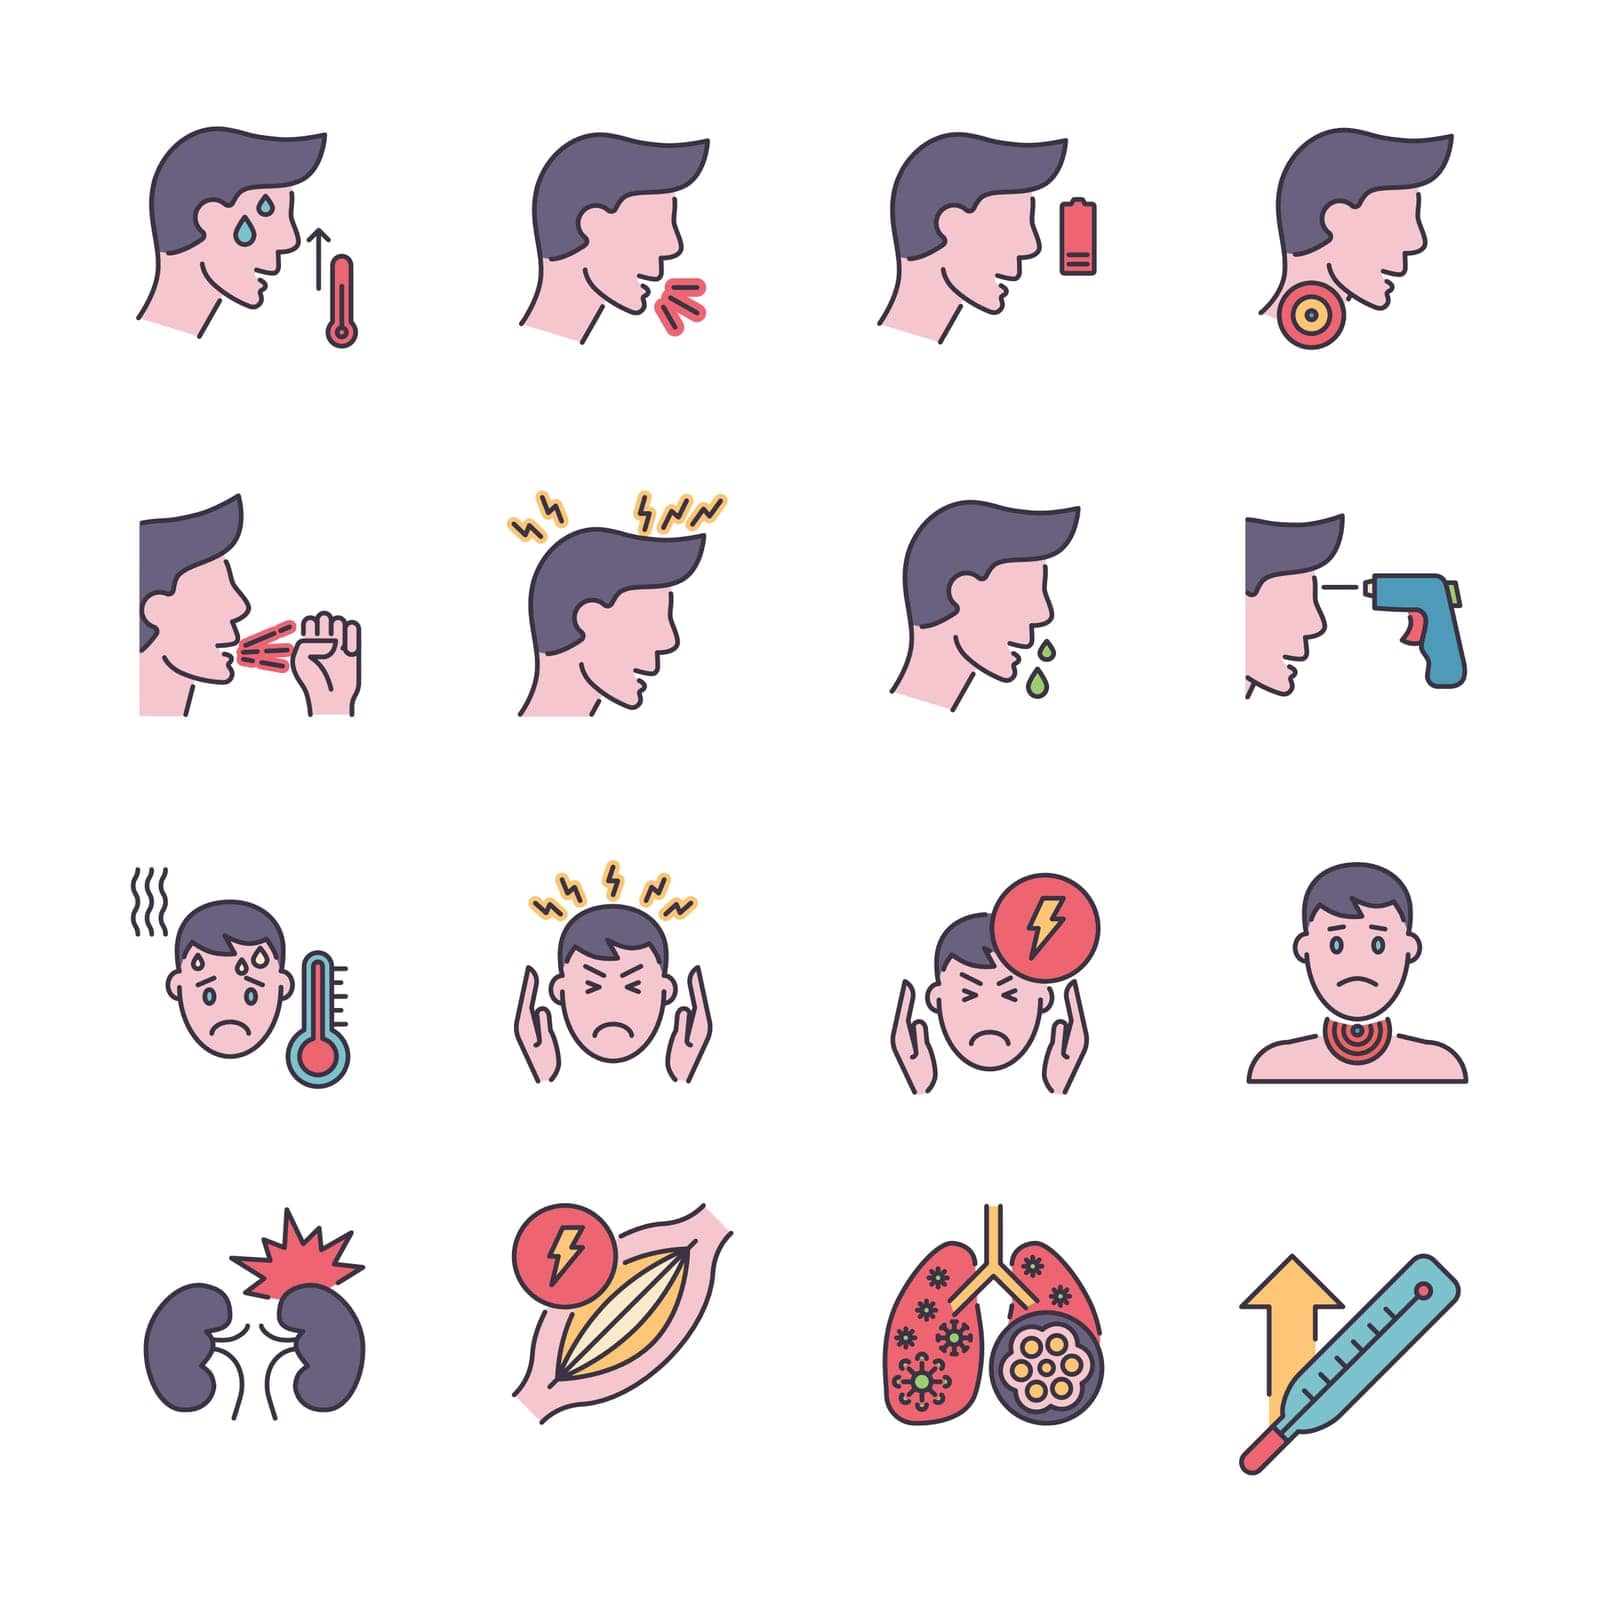 Coronavirus symptoms related vector icons set by smoki